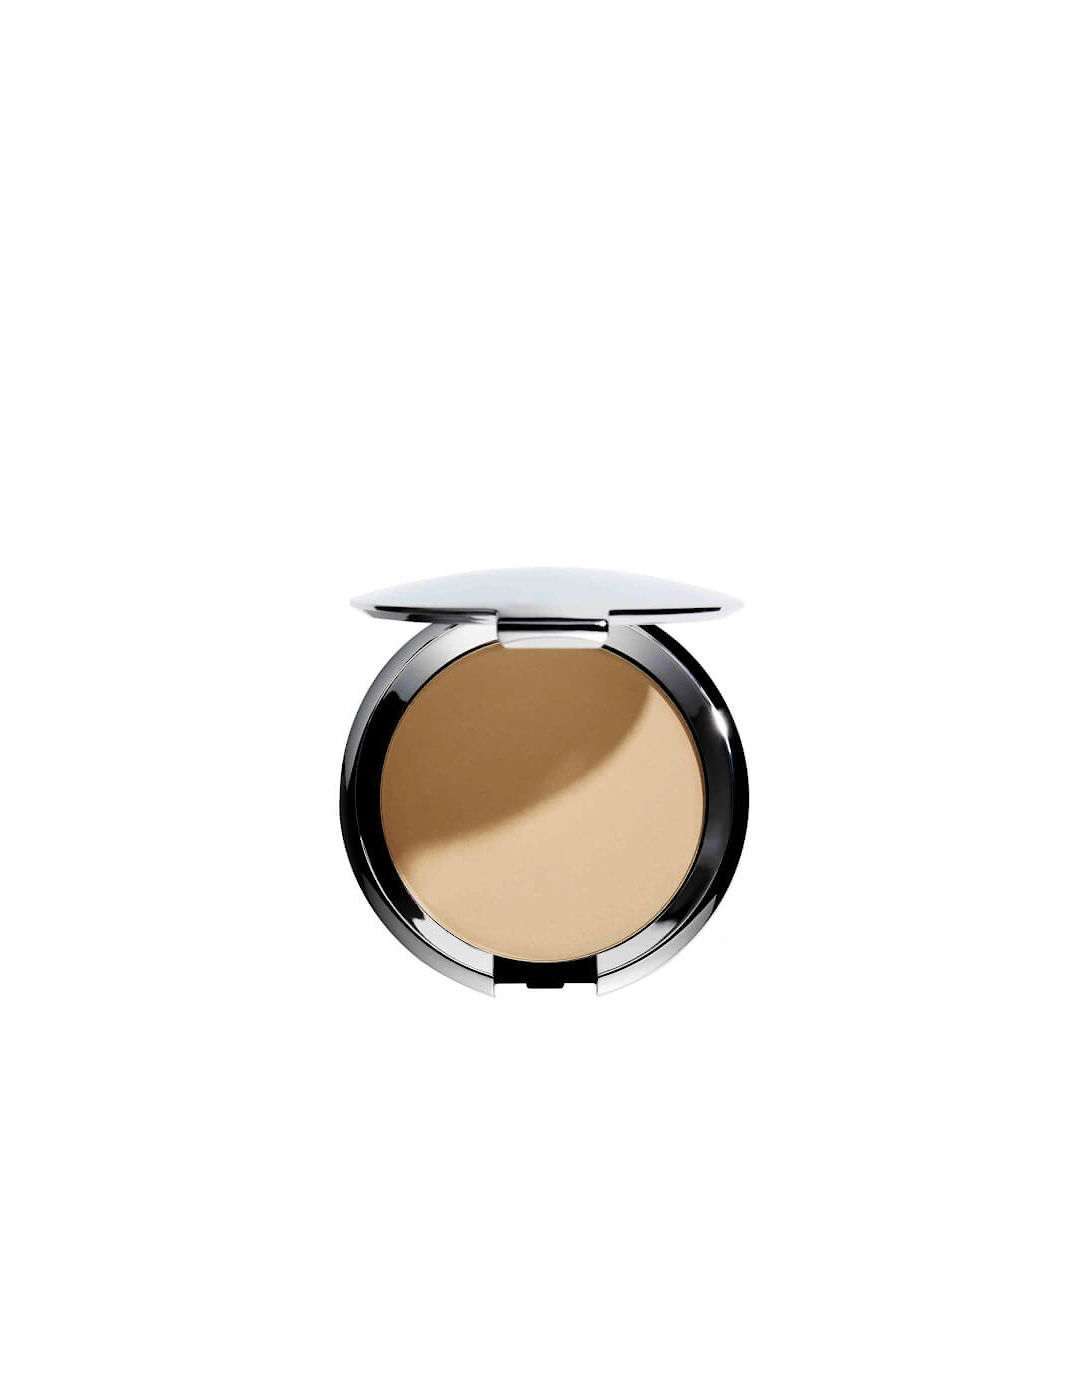 Compact Makeup - Bamboo - - Compact Makeup - Bamboo - Compact Makeup - Camel - Compact Makeup - Cashew - Compact Makeup - Dune - Compact Makeup - Maple - Compact Makeup - Peach - Compact Makeup - Petal - Compact Makeup - Shell - Compact Makeup Foundation - Zhan, 2 of 1